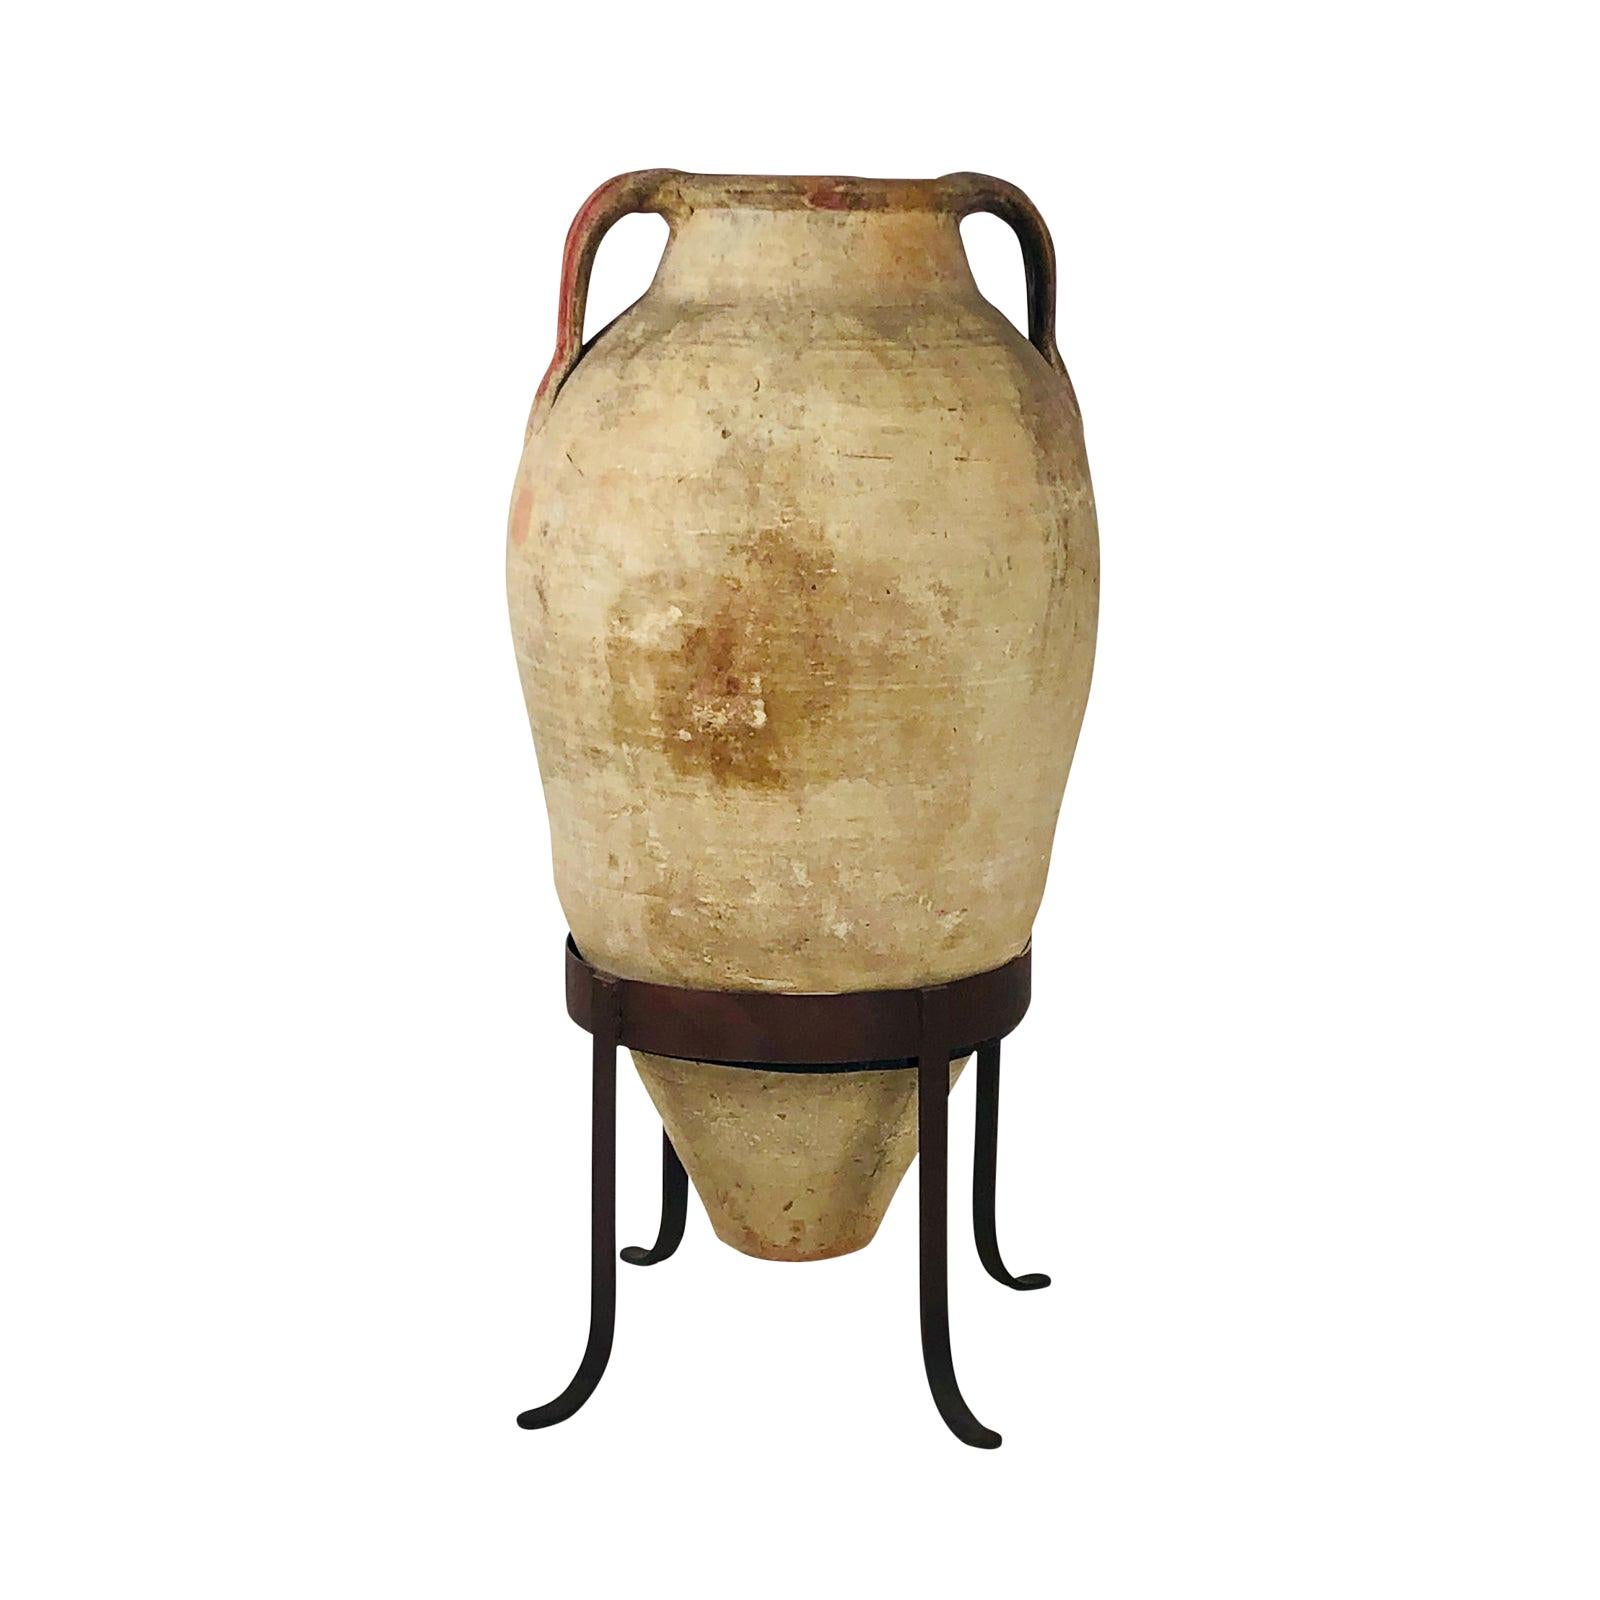 Large and Tall Amphora, circa 300 AD